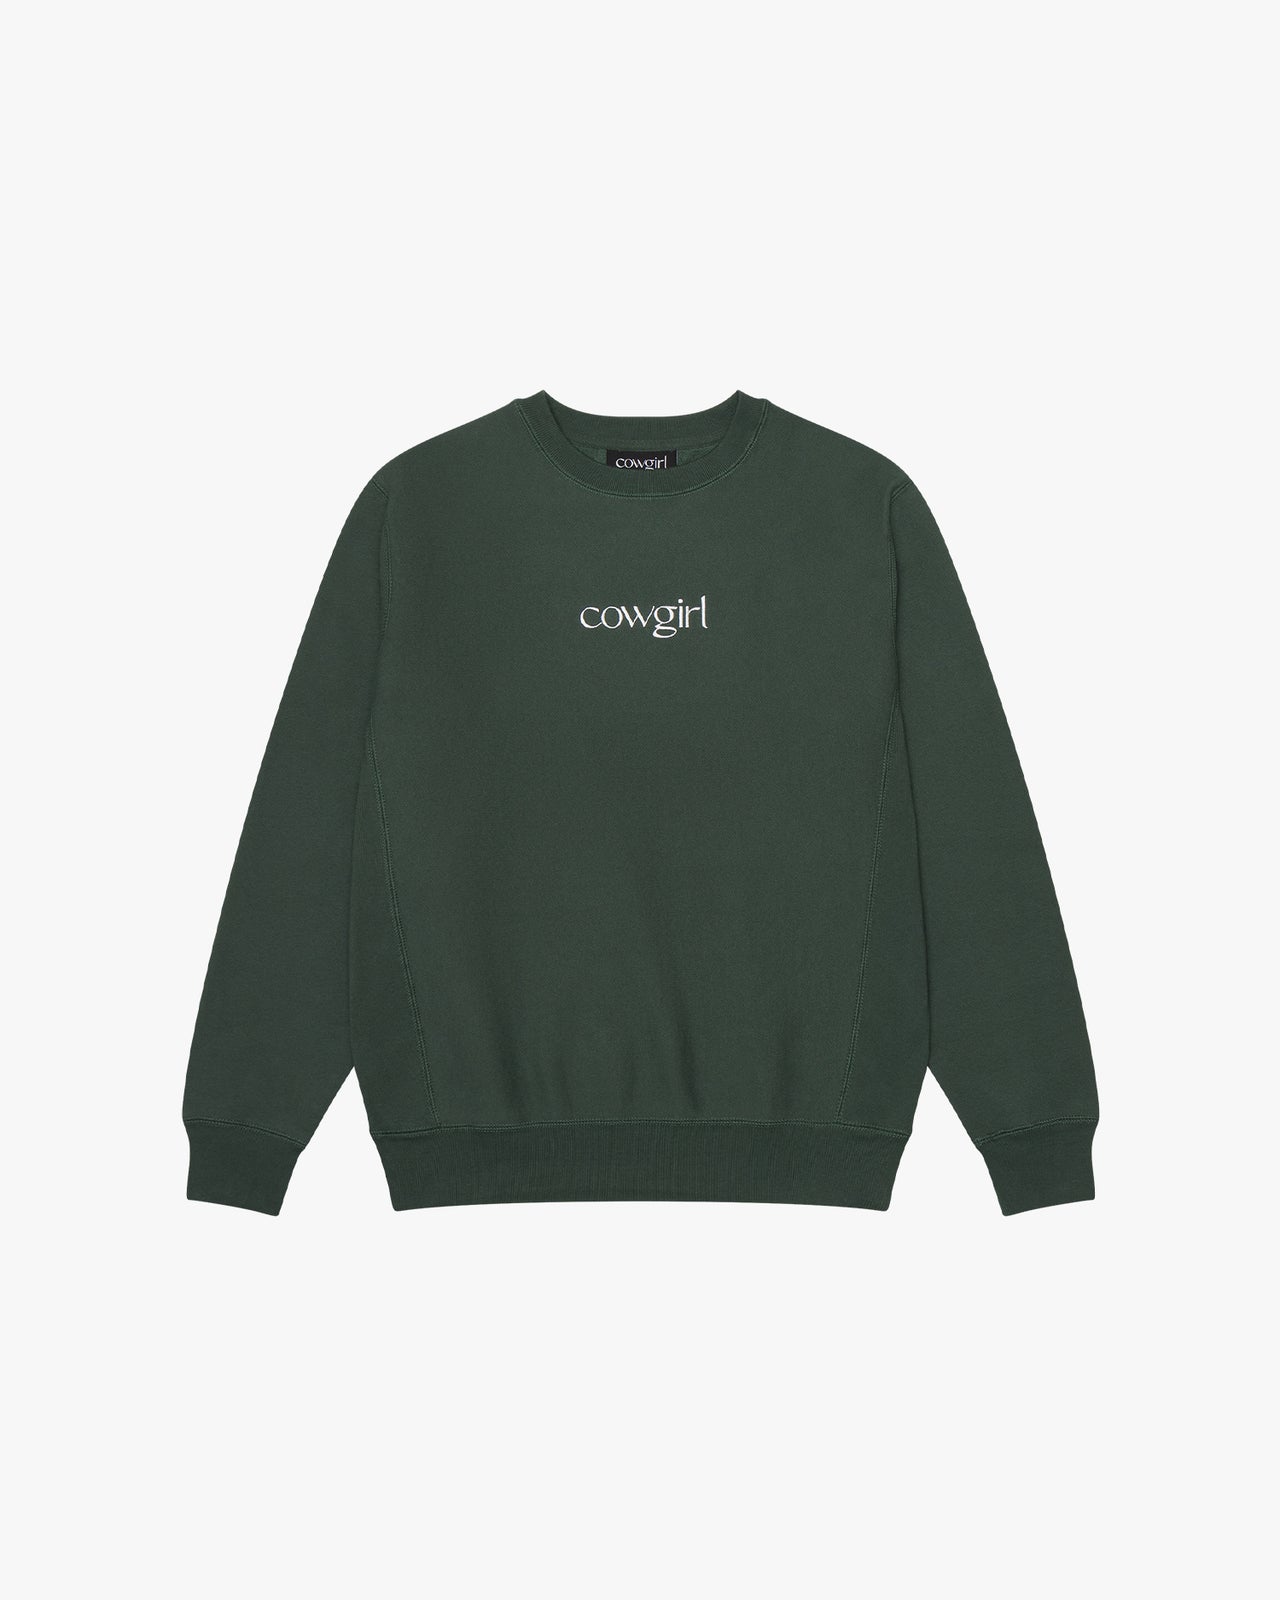 Cowgirl Sweatshirt (Green)